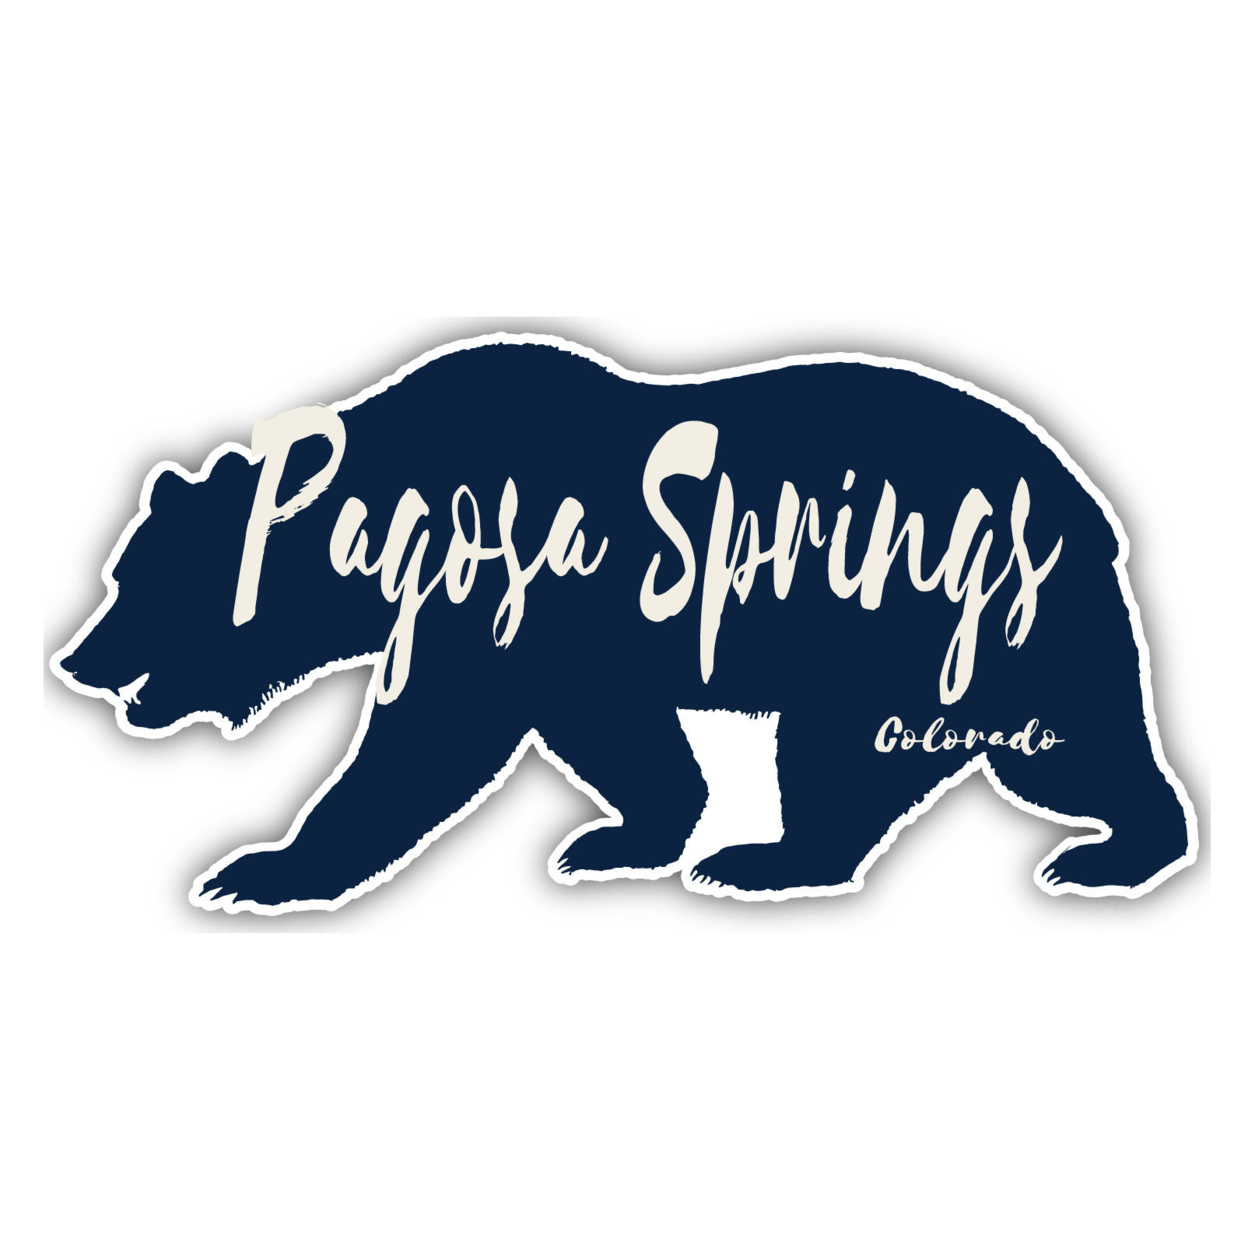 Pagosa Springs Colorado Souvenir Decorative Stickers (Choose Theme And Size) - Single Unit, 2-Inch, Bear